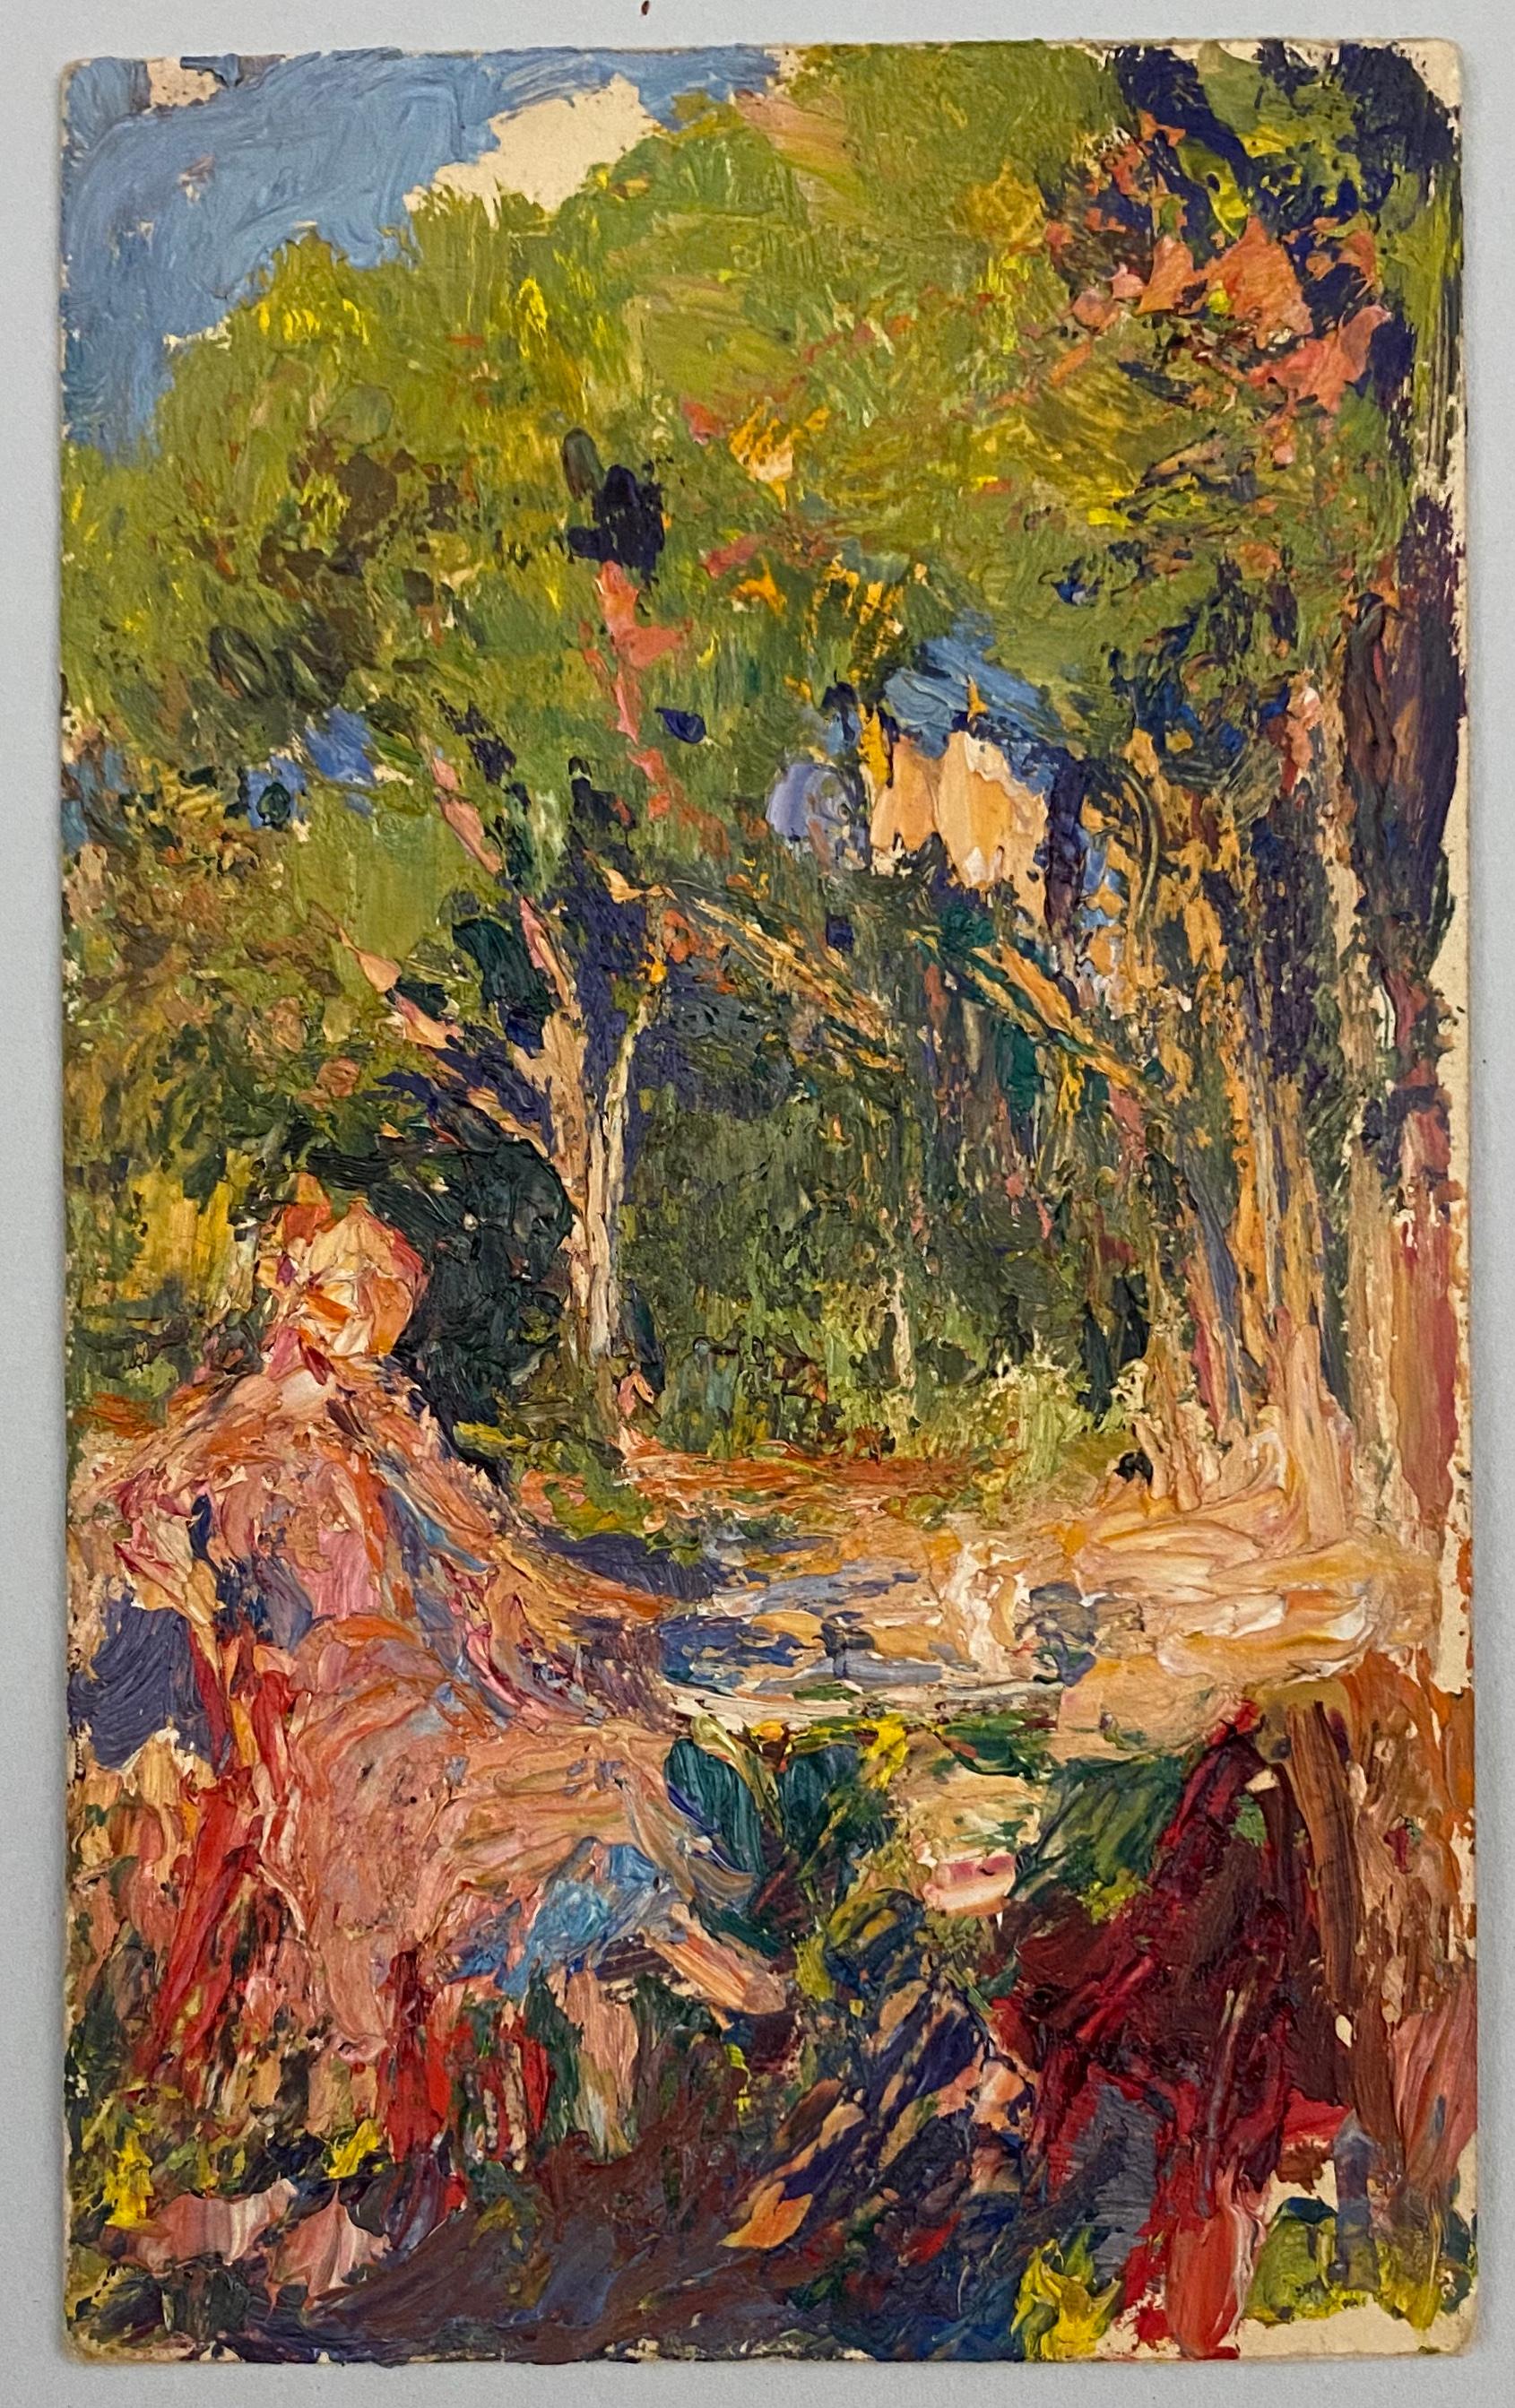 VAN BIESBROECK Jules. Woman in a garden. Oil sketch on cardboard.